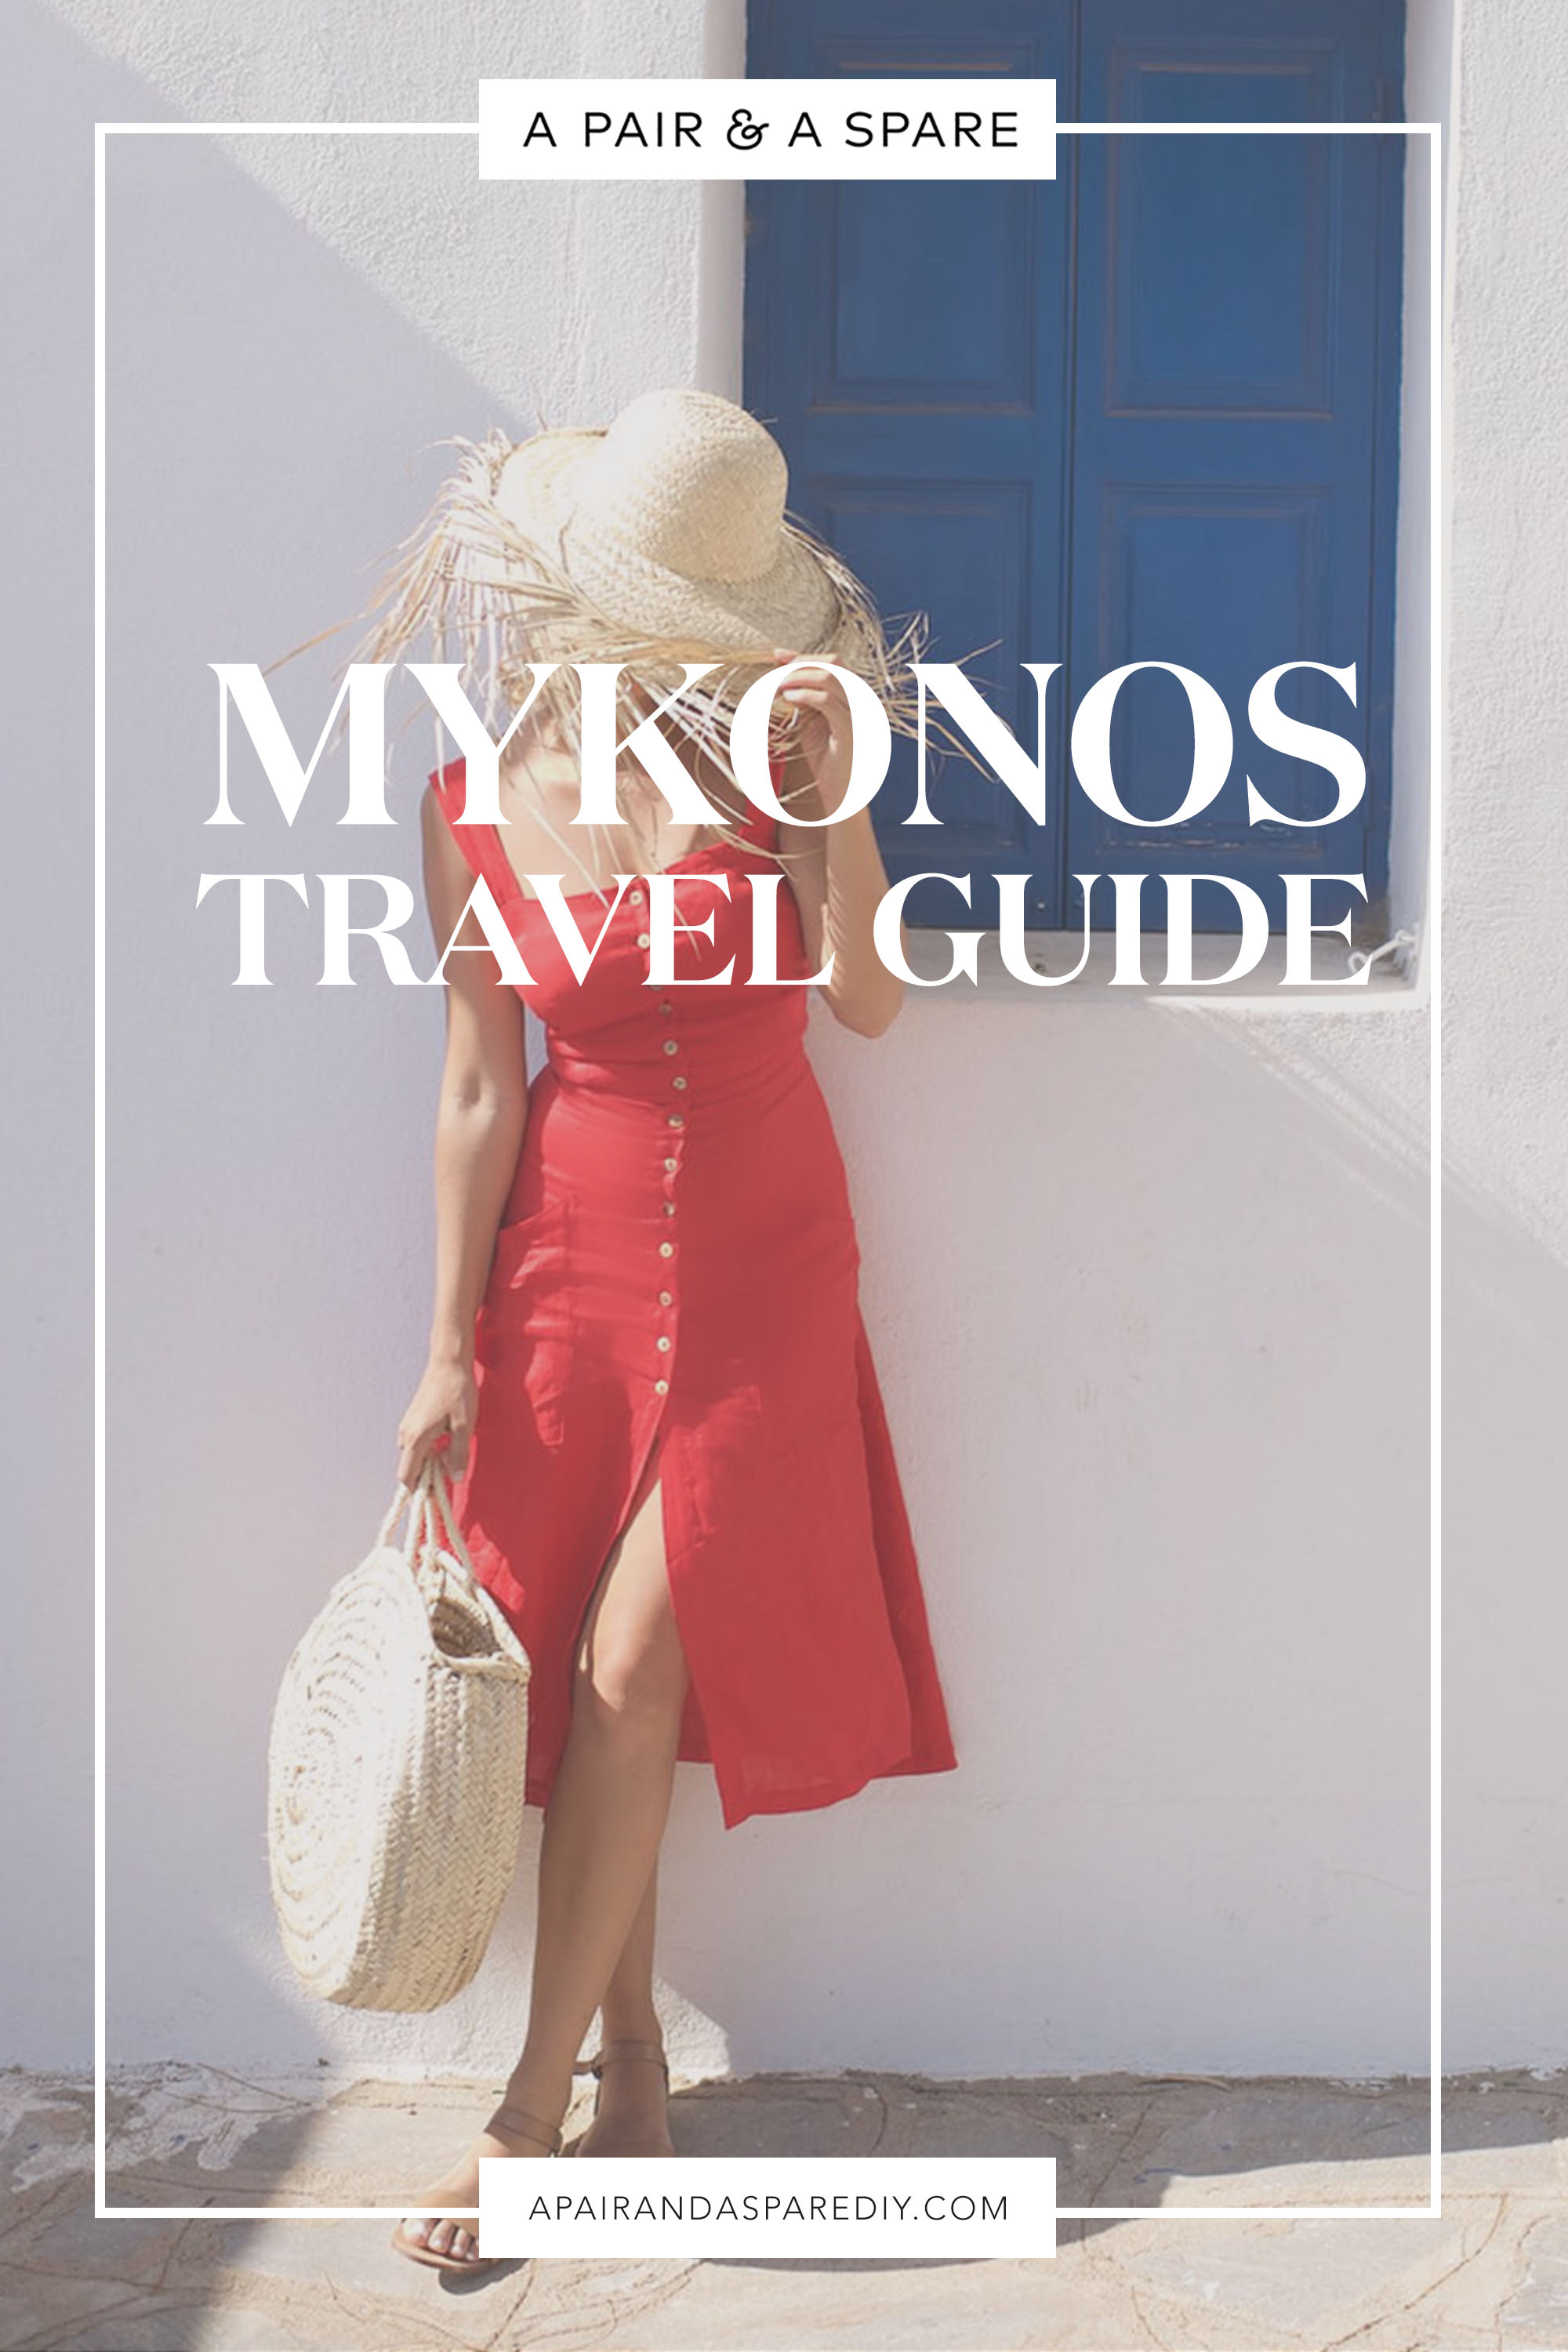 Mykonos Travel Guide